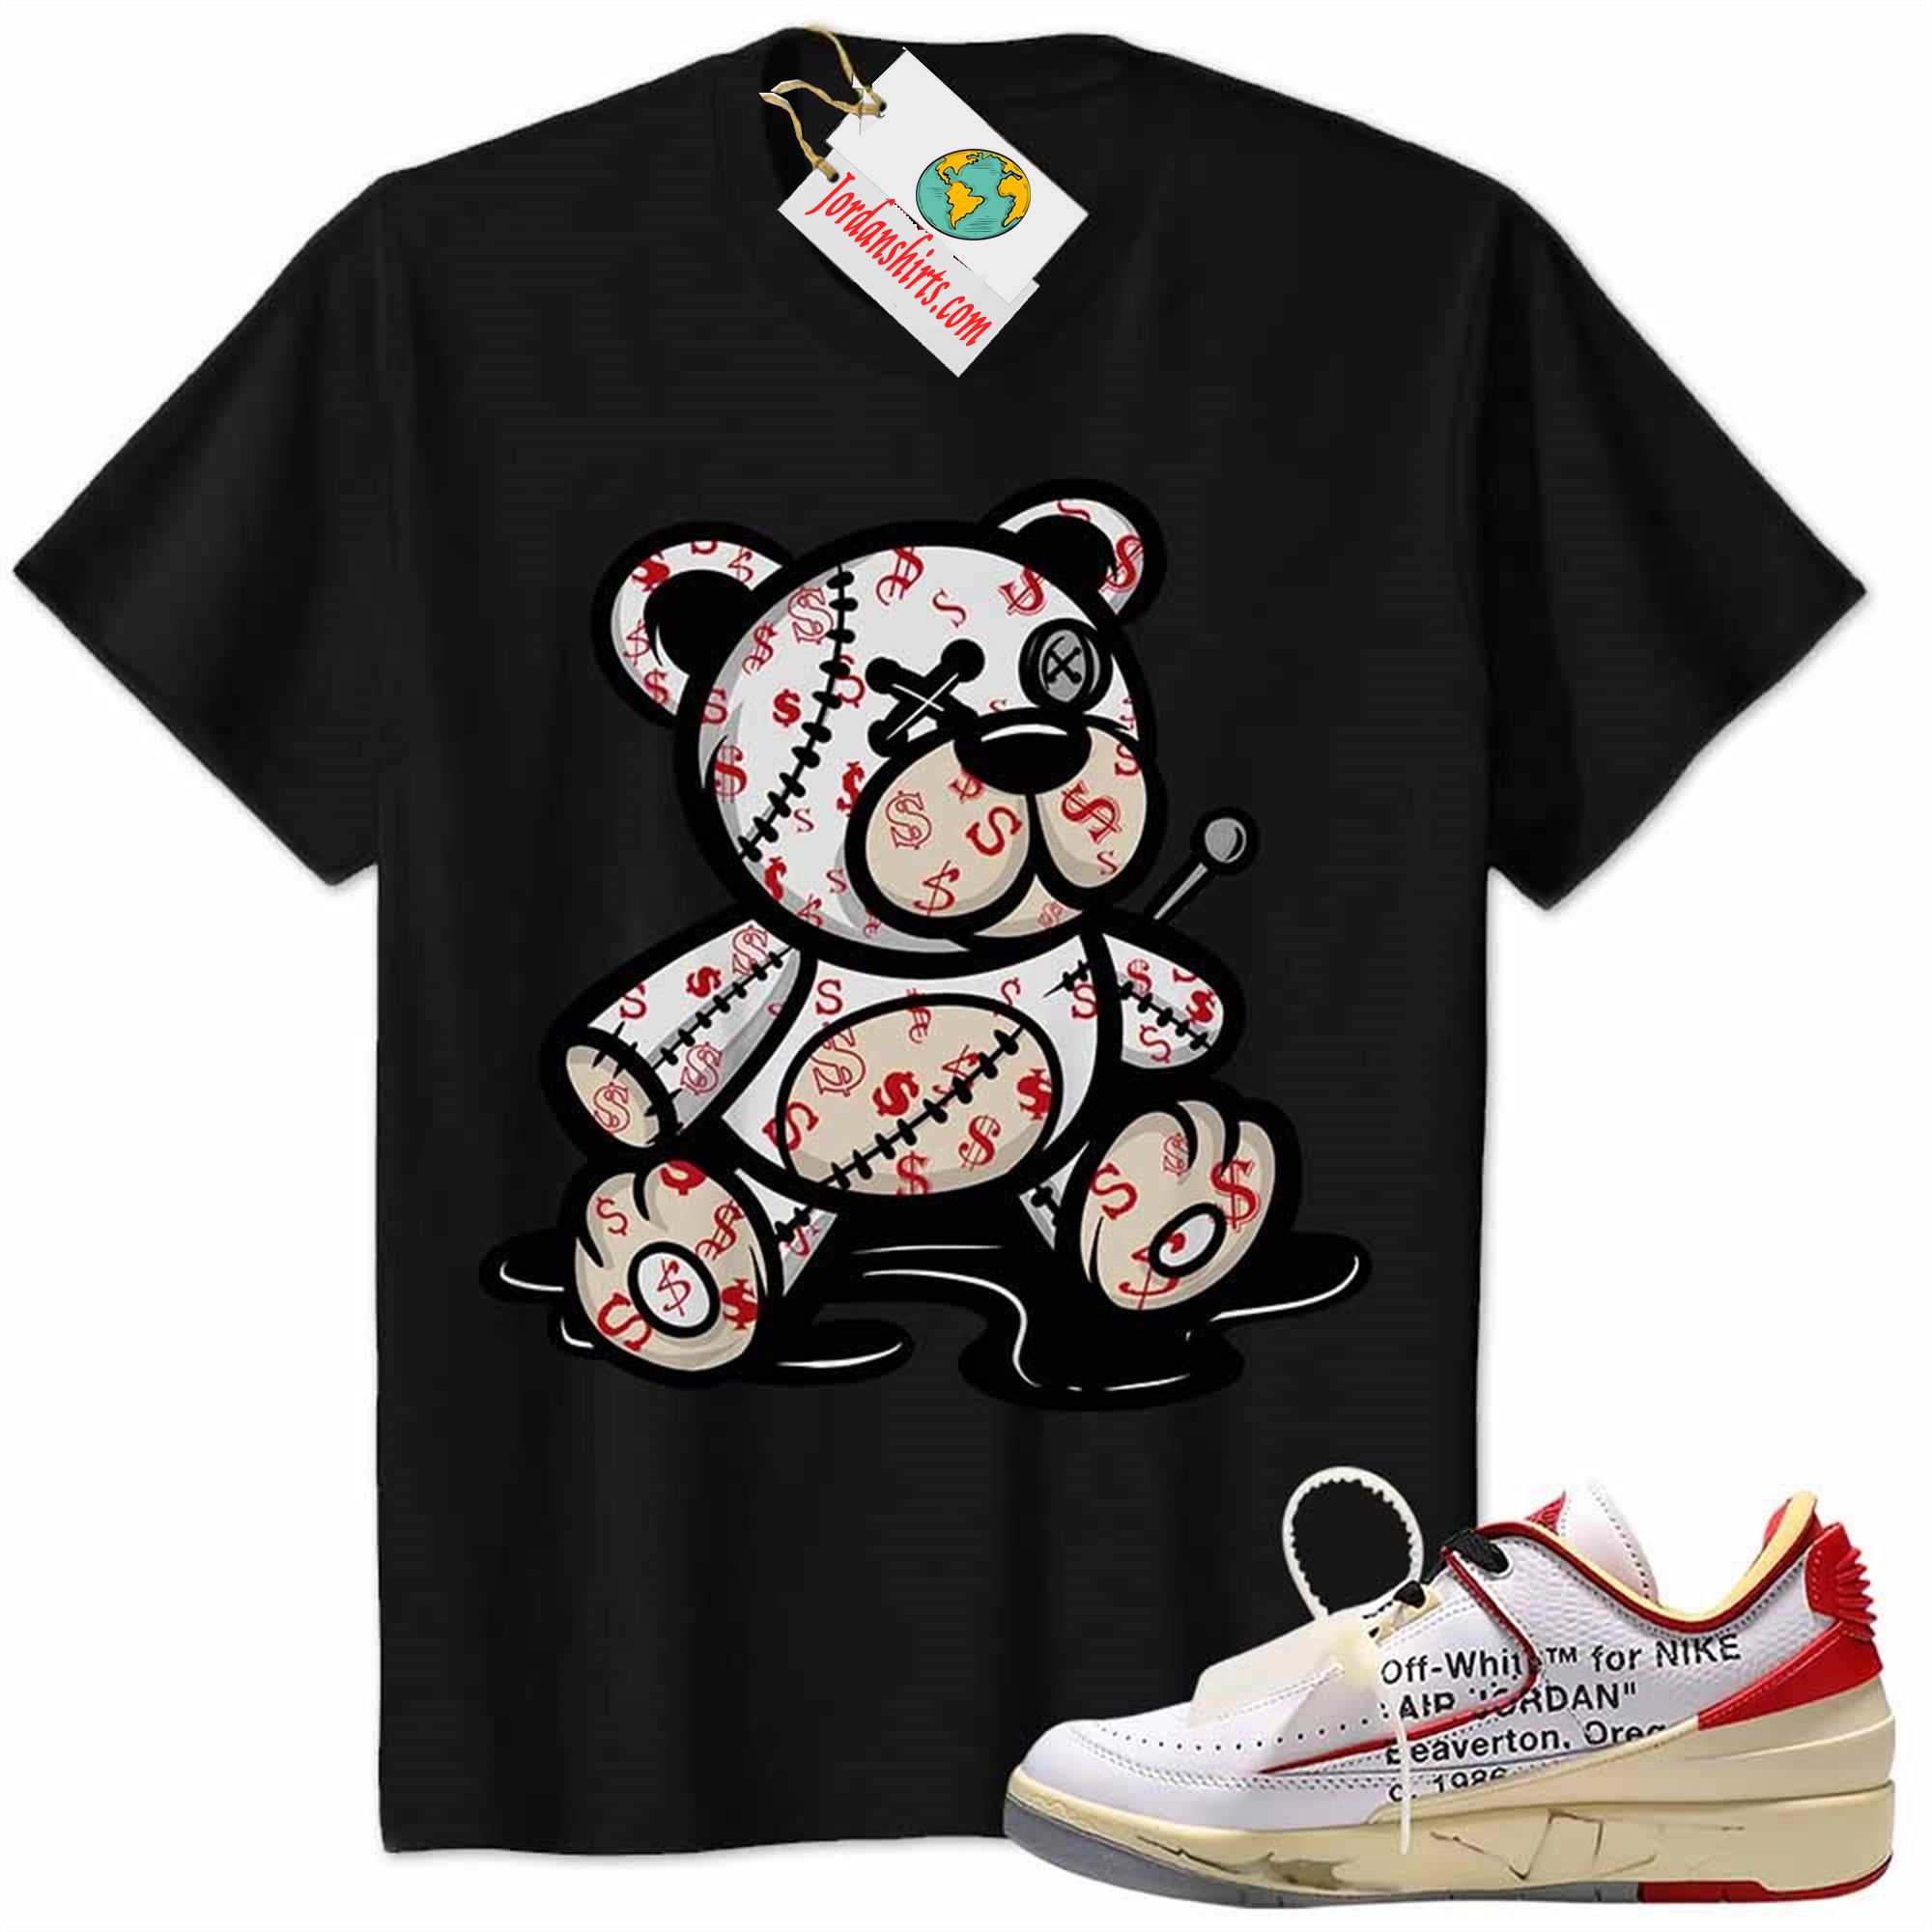 Jordan 2 Shirt, Jordan 2 Low White Red Off-white Shirt Teddy Bear All Money In Black Size Up To 5xl